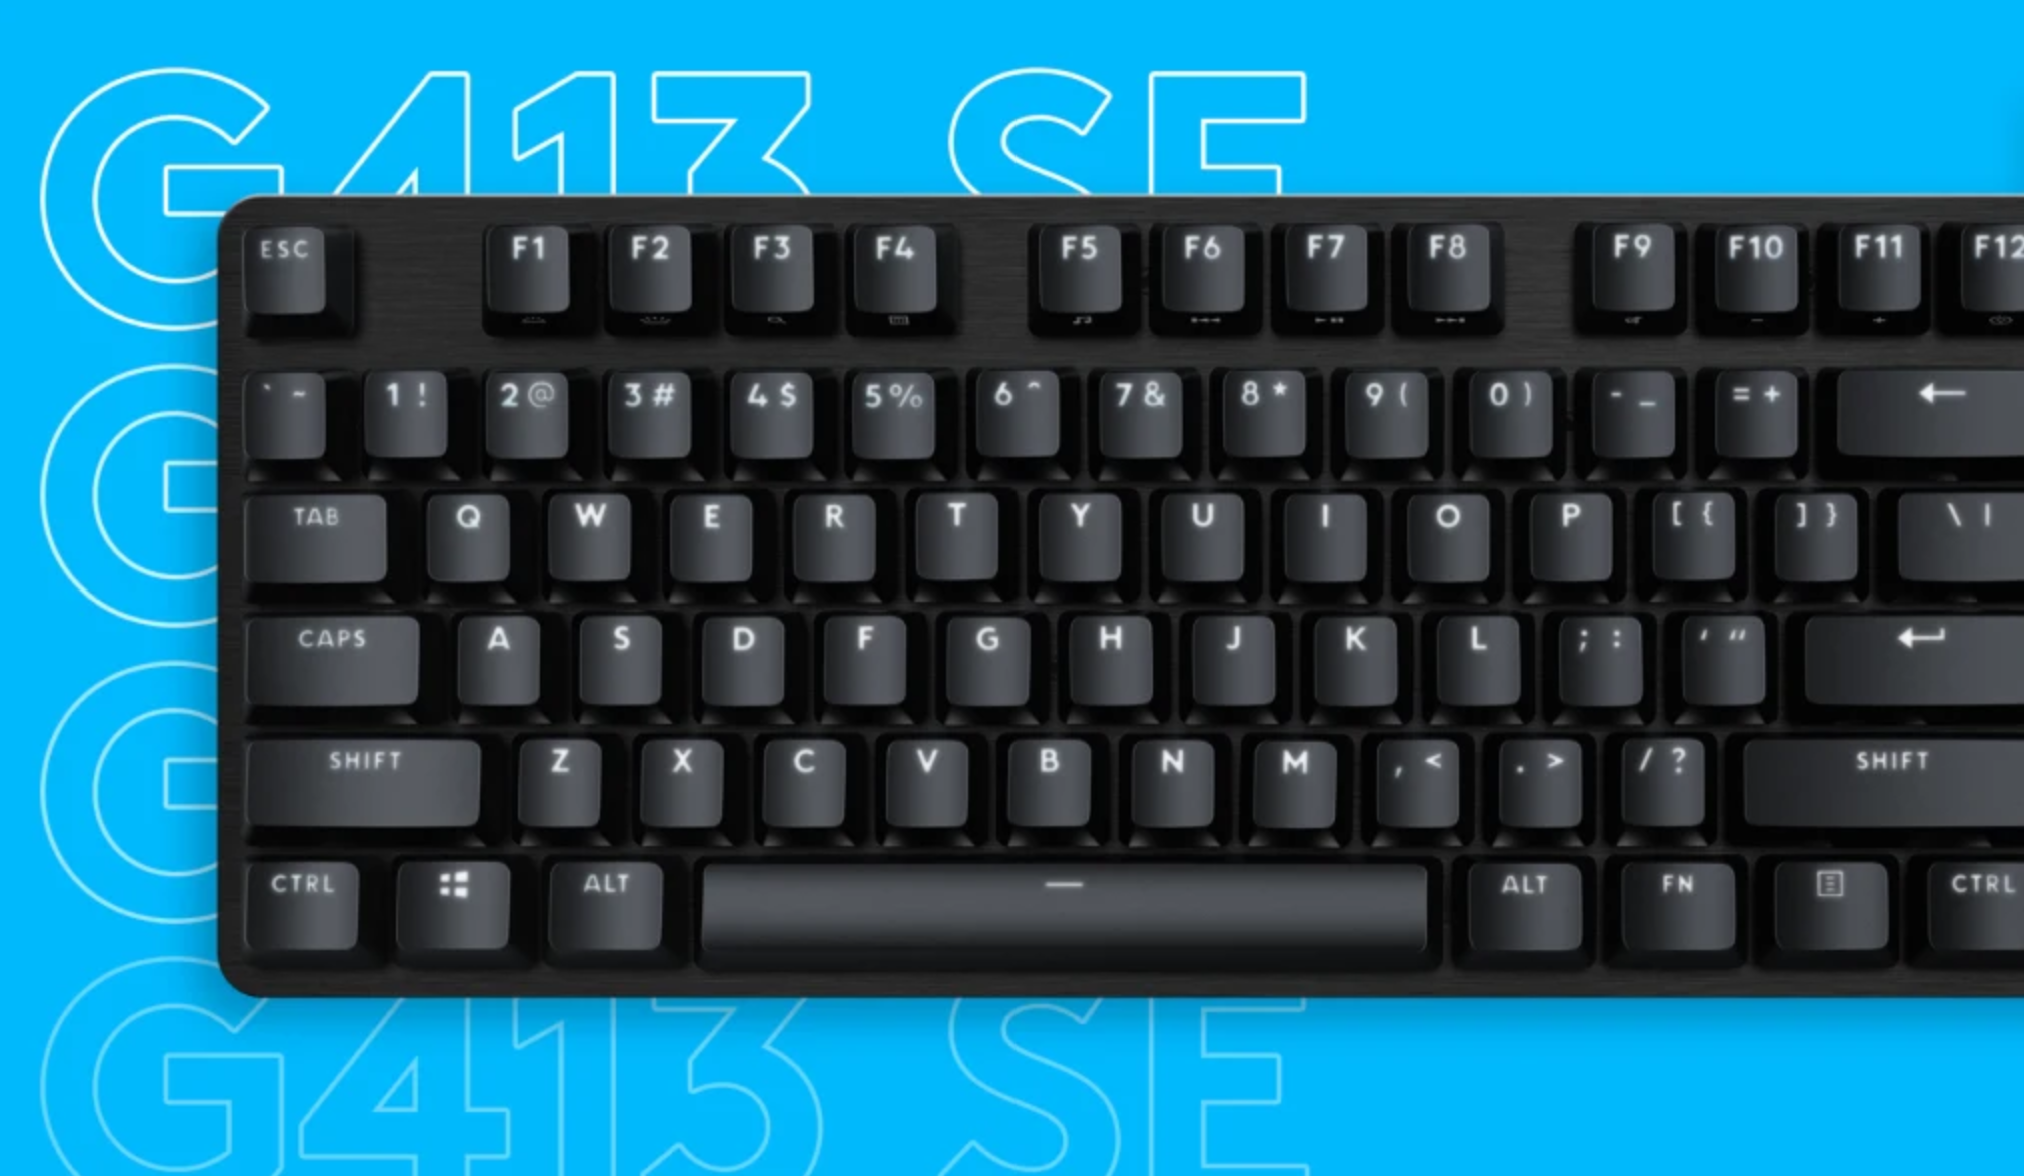 Logitech G413 Gaming Keyboard models launched starting at $69.99 - Gizmochina